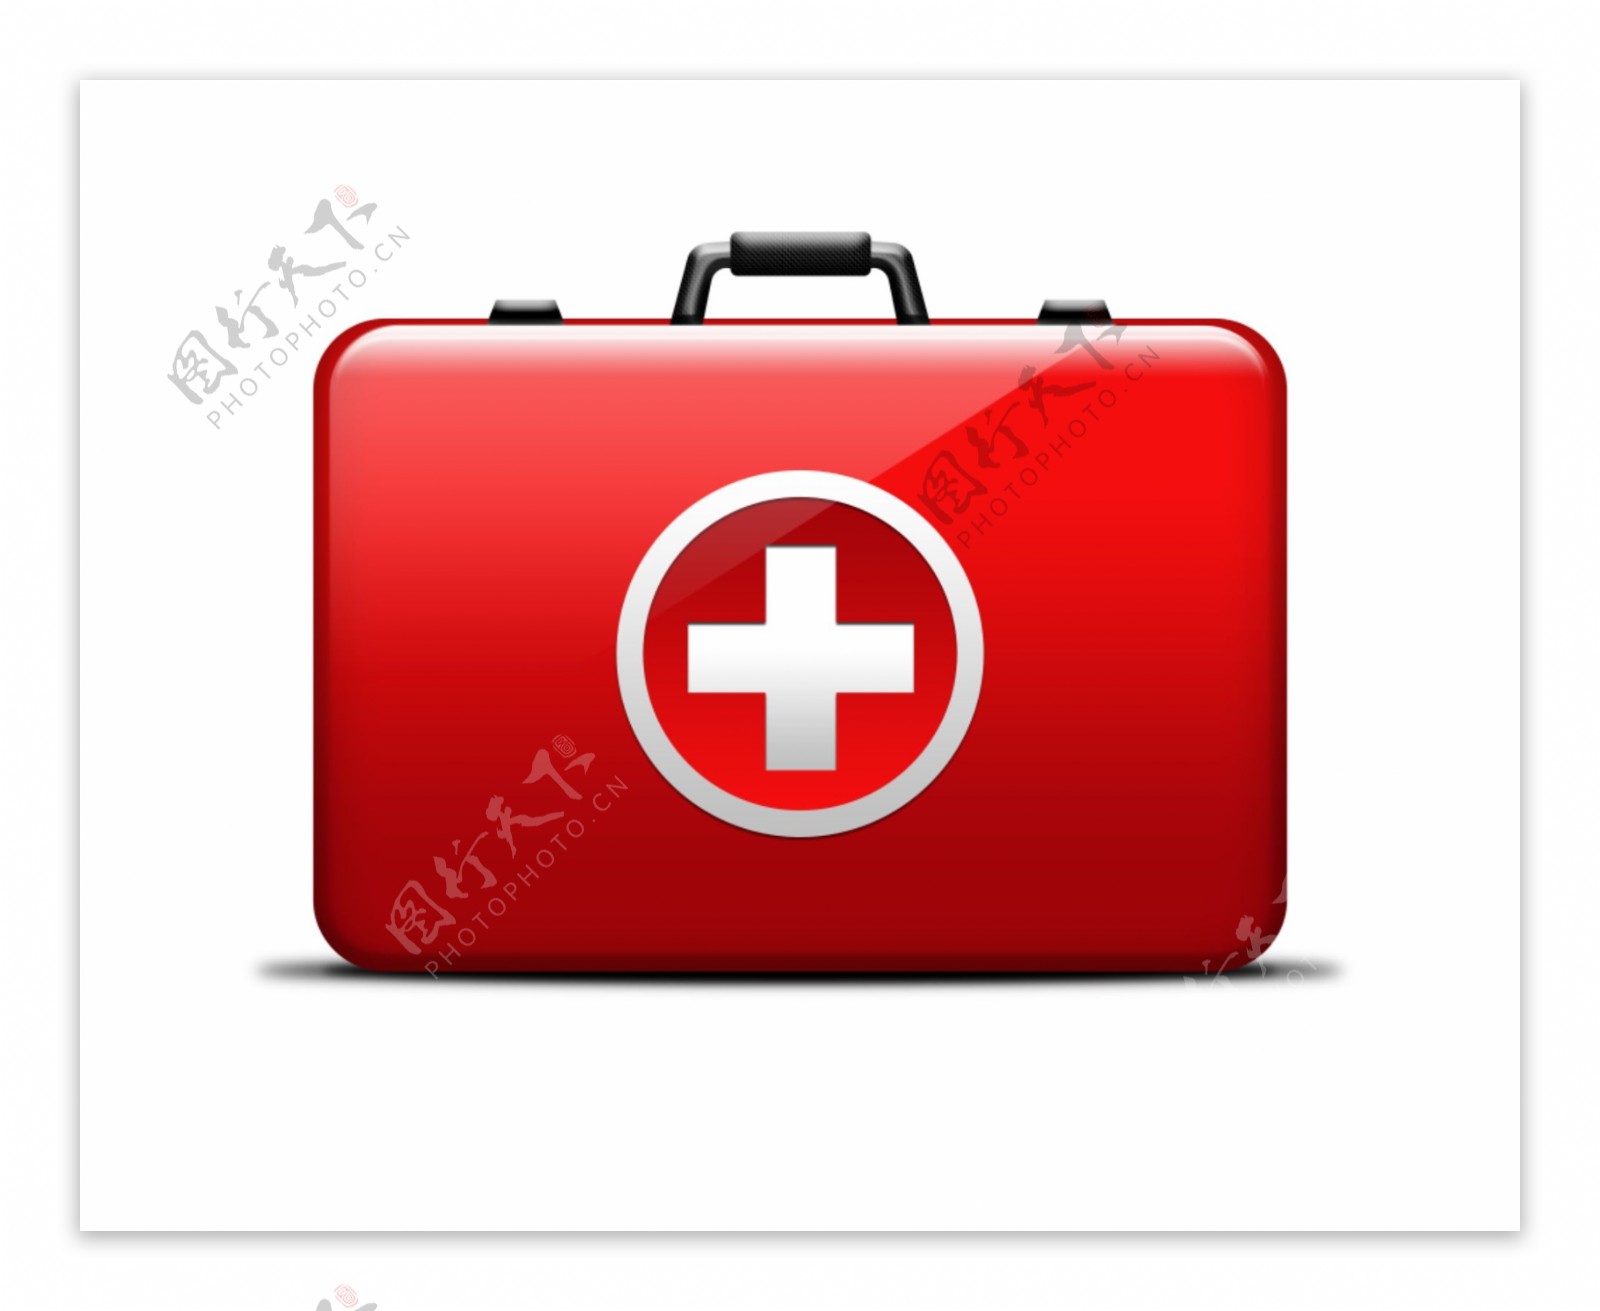 红色医药医物箱icon图标设计